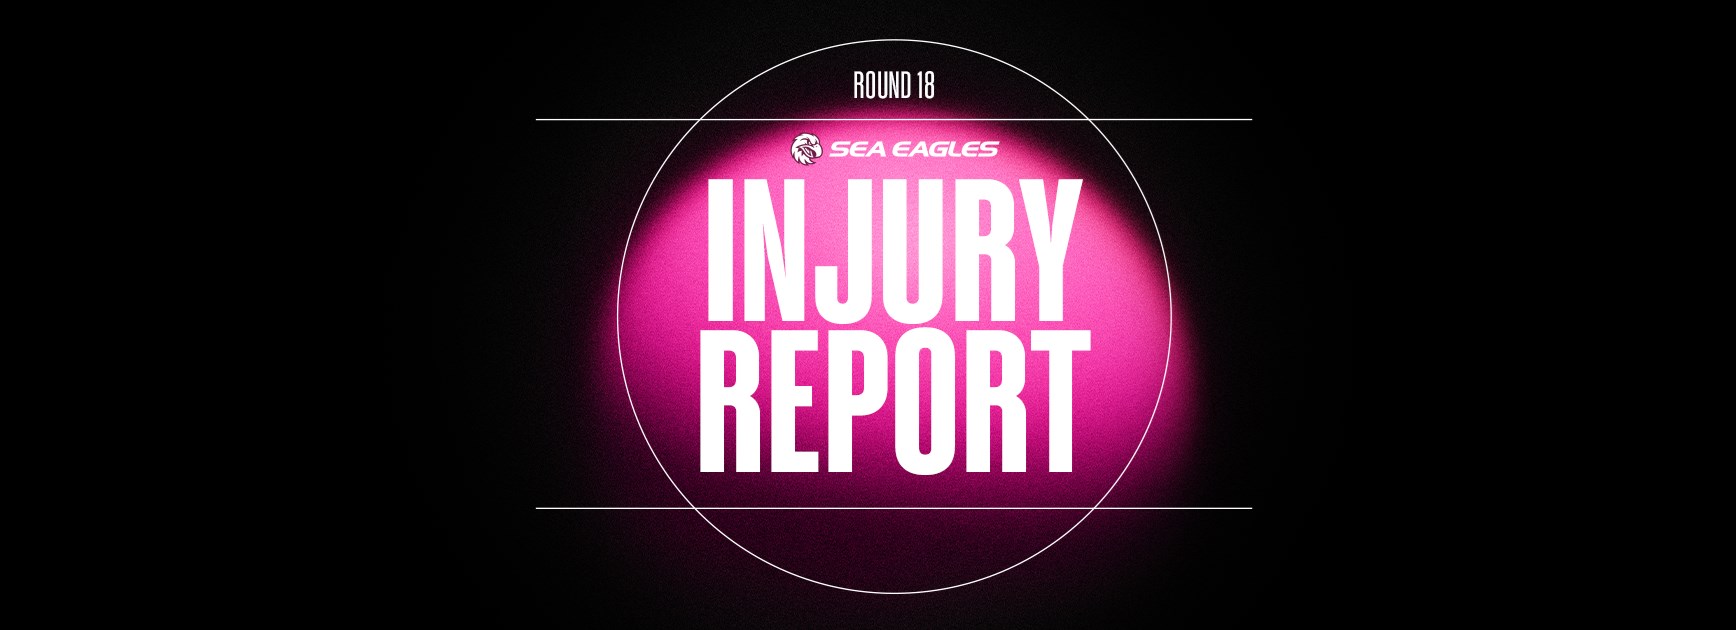 Round 18 Sea Eagles Injury Report